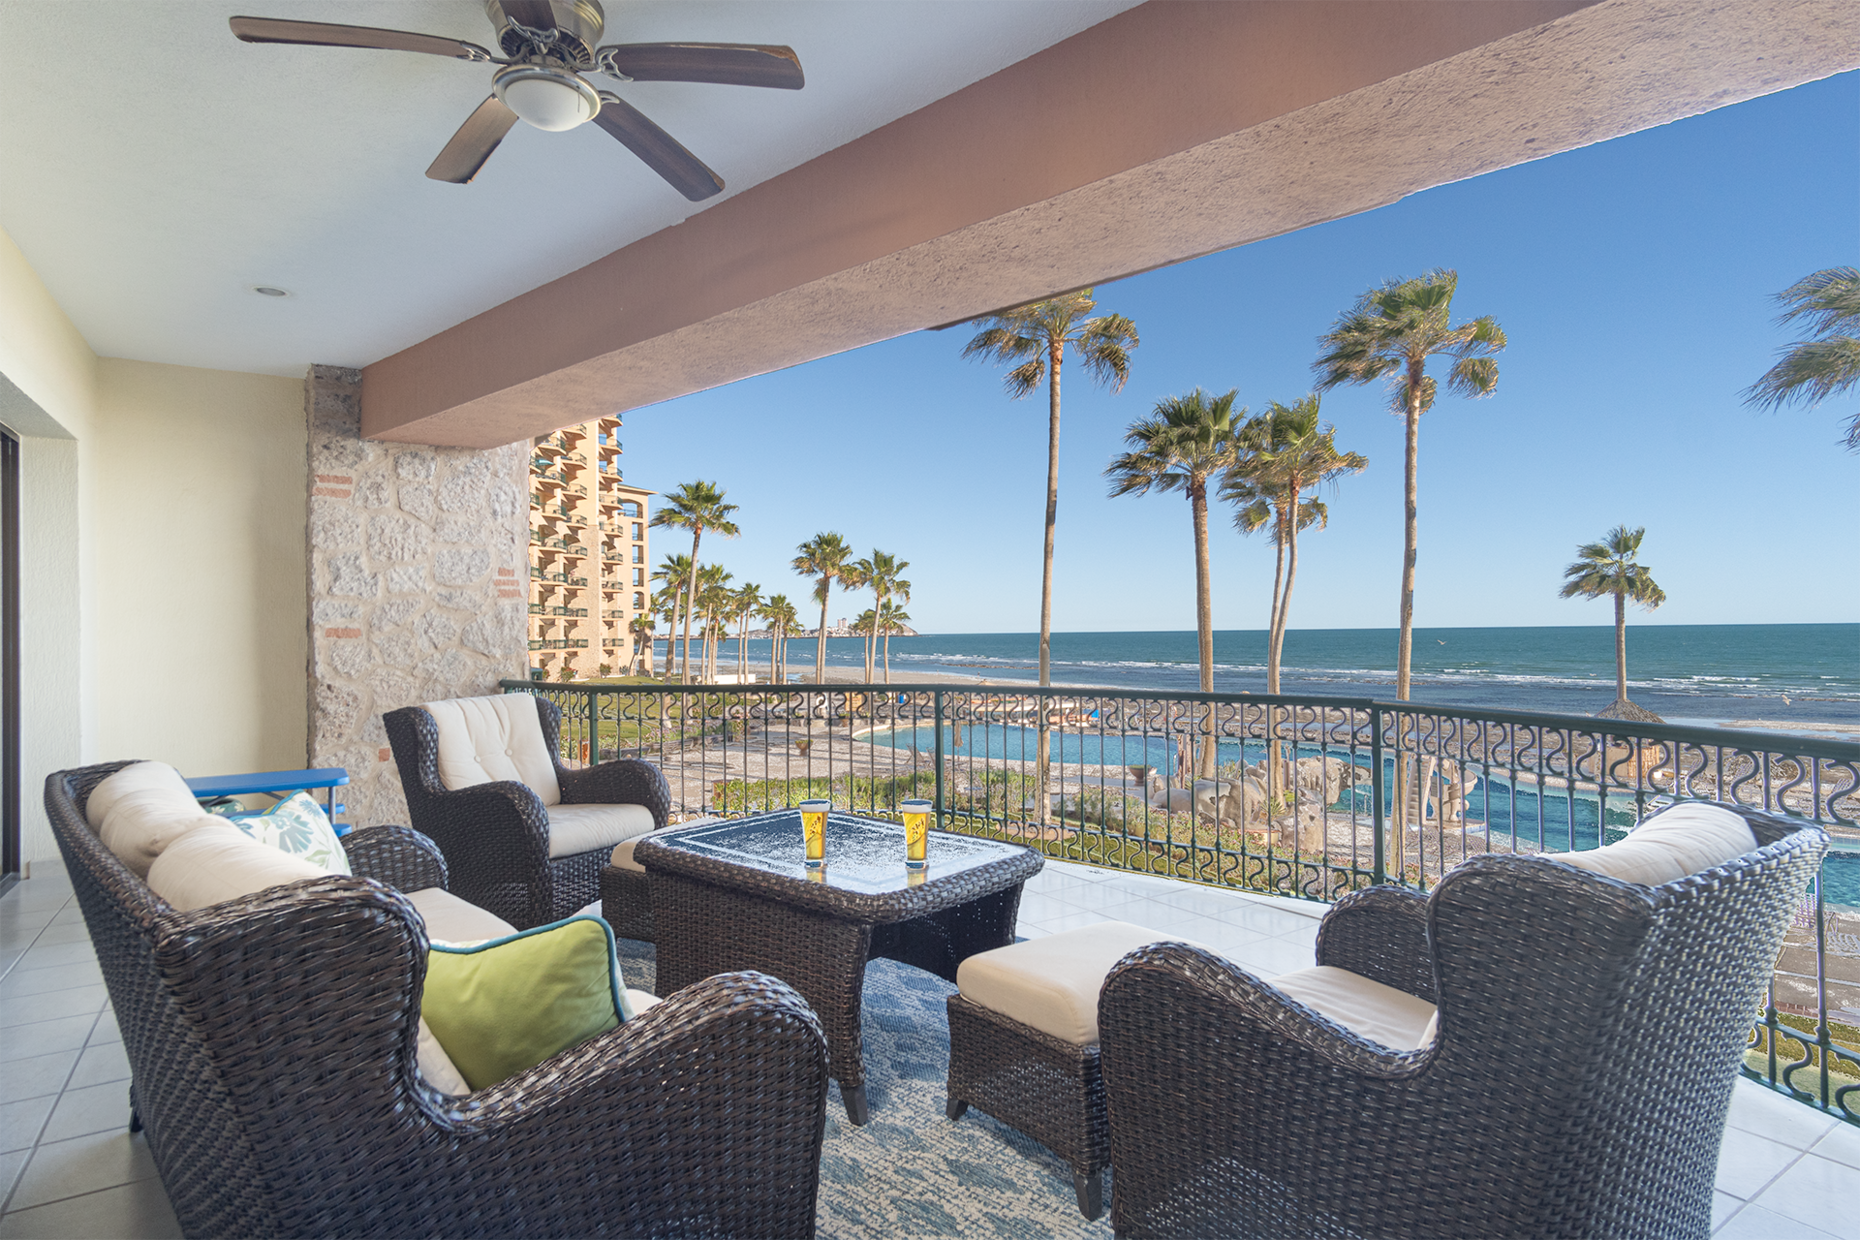 Breathtaking patio views, with beautiful Sonoran Sea Resort right below!